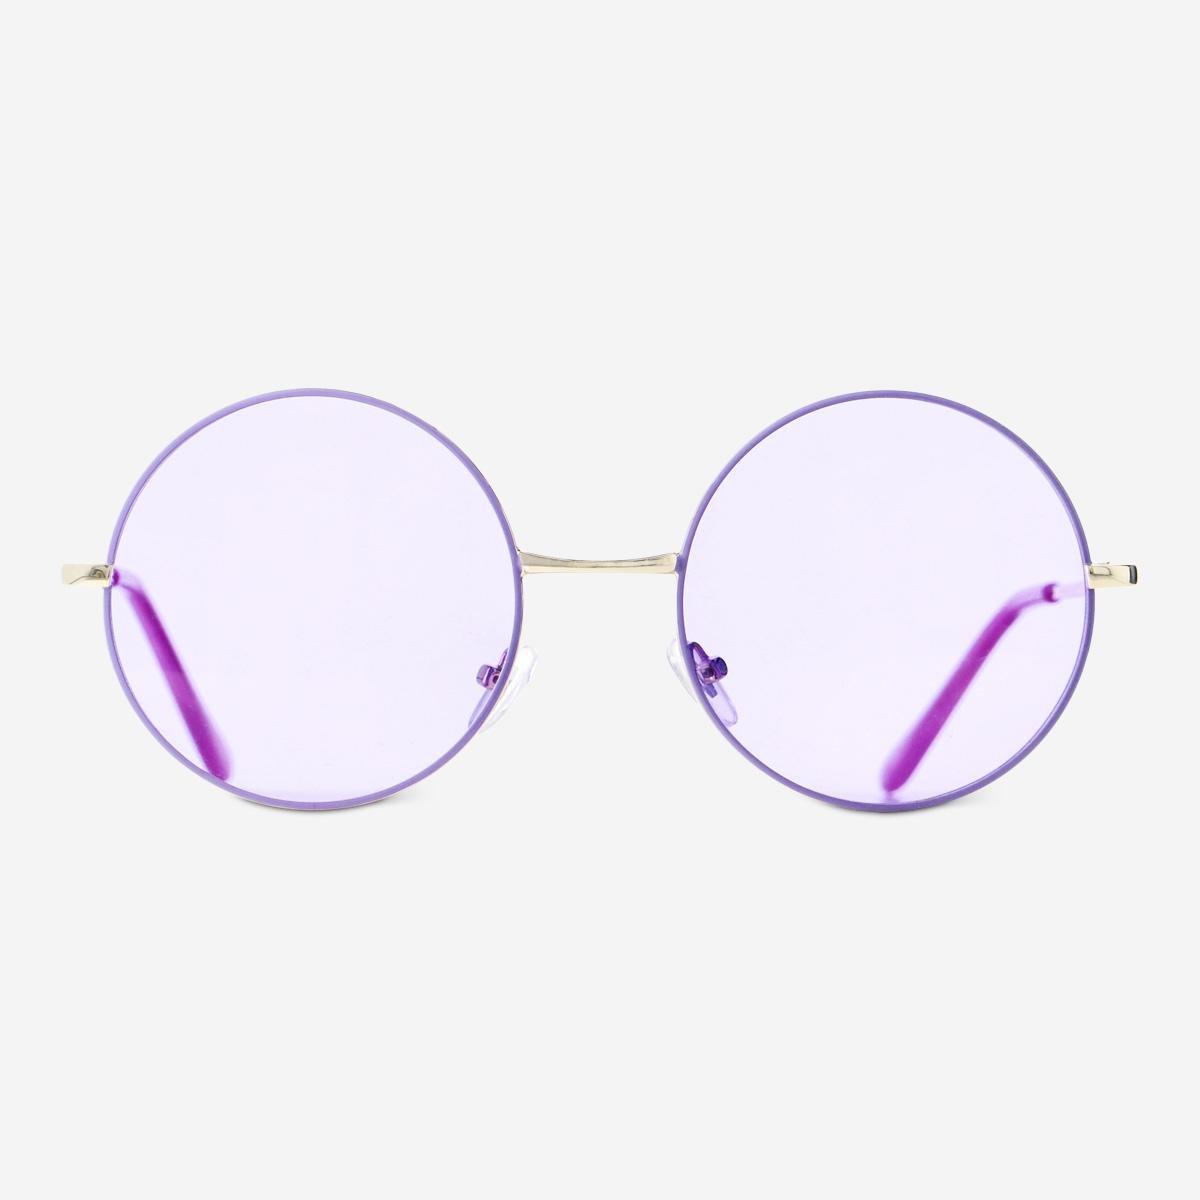 Purple sunglasses